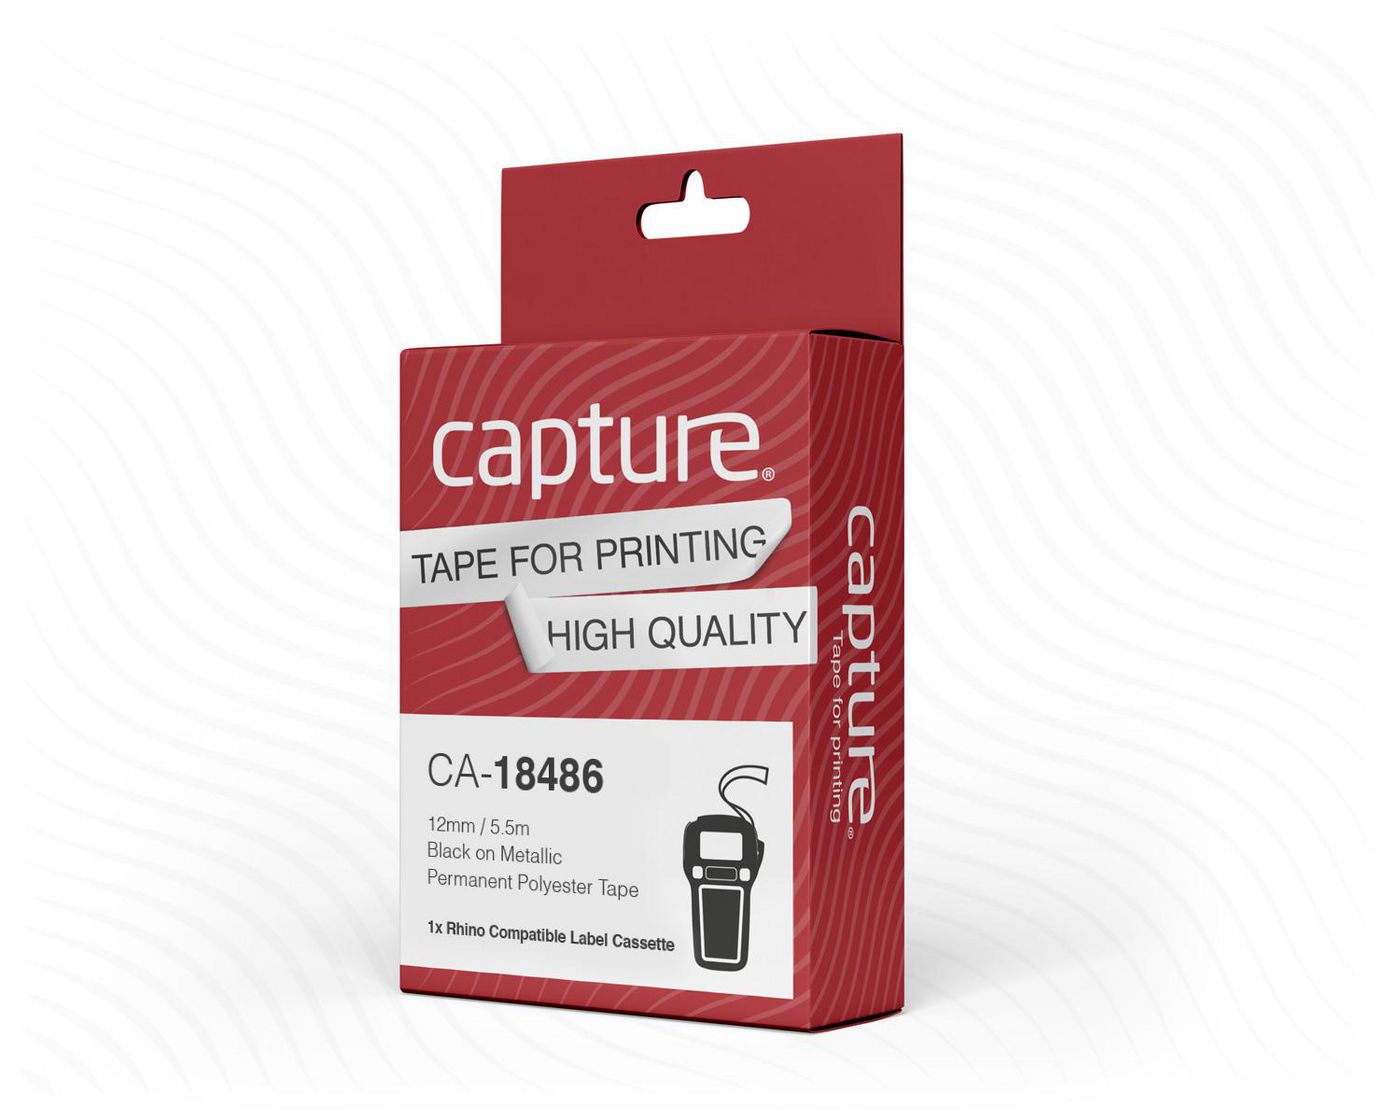 Capture 12mm x 5.5m Black on Metallic  Permanent Polyester Tape  CA-18486 - eet01